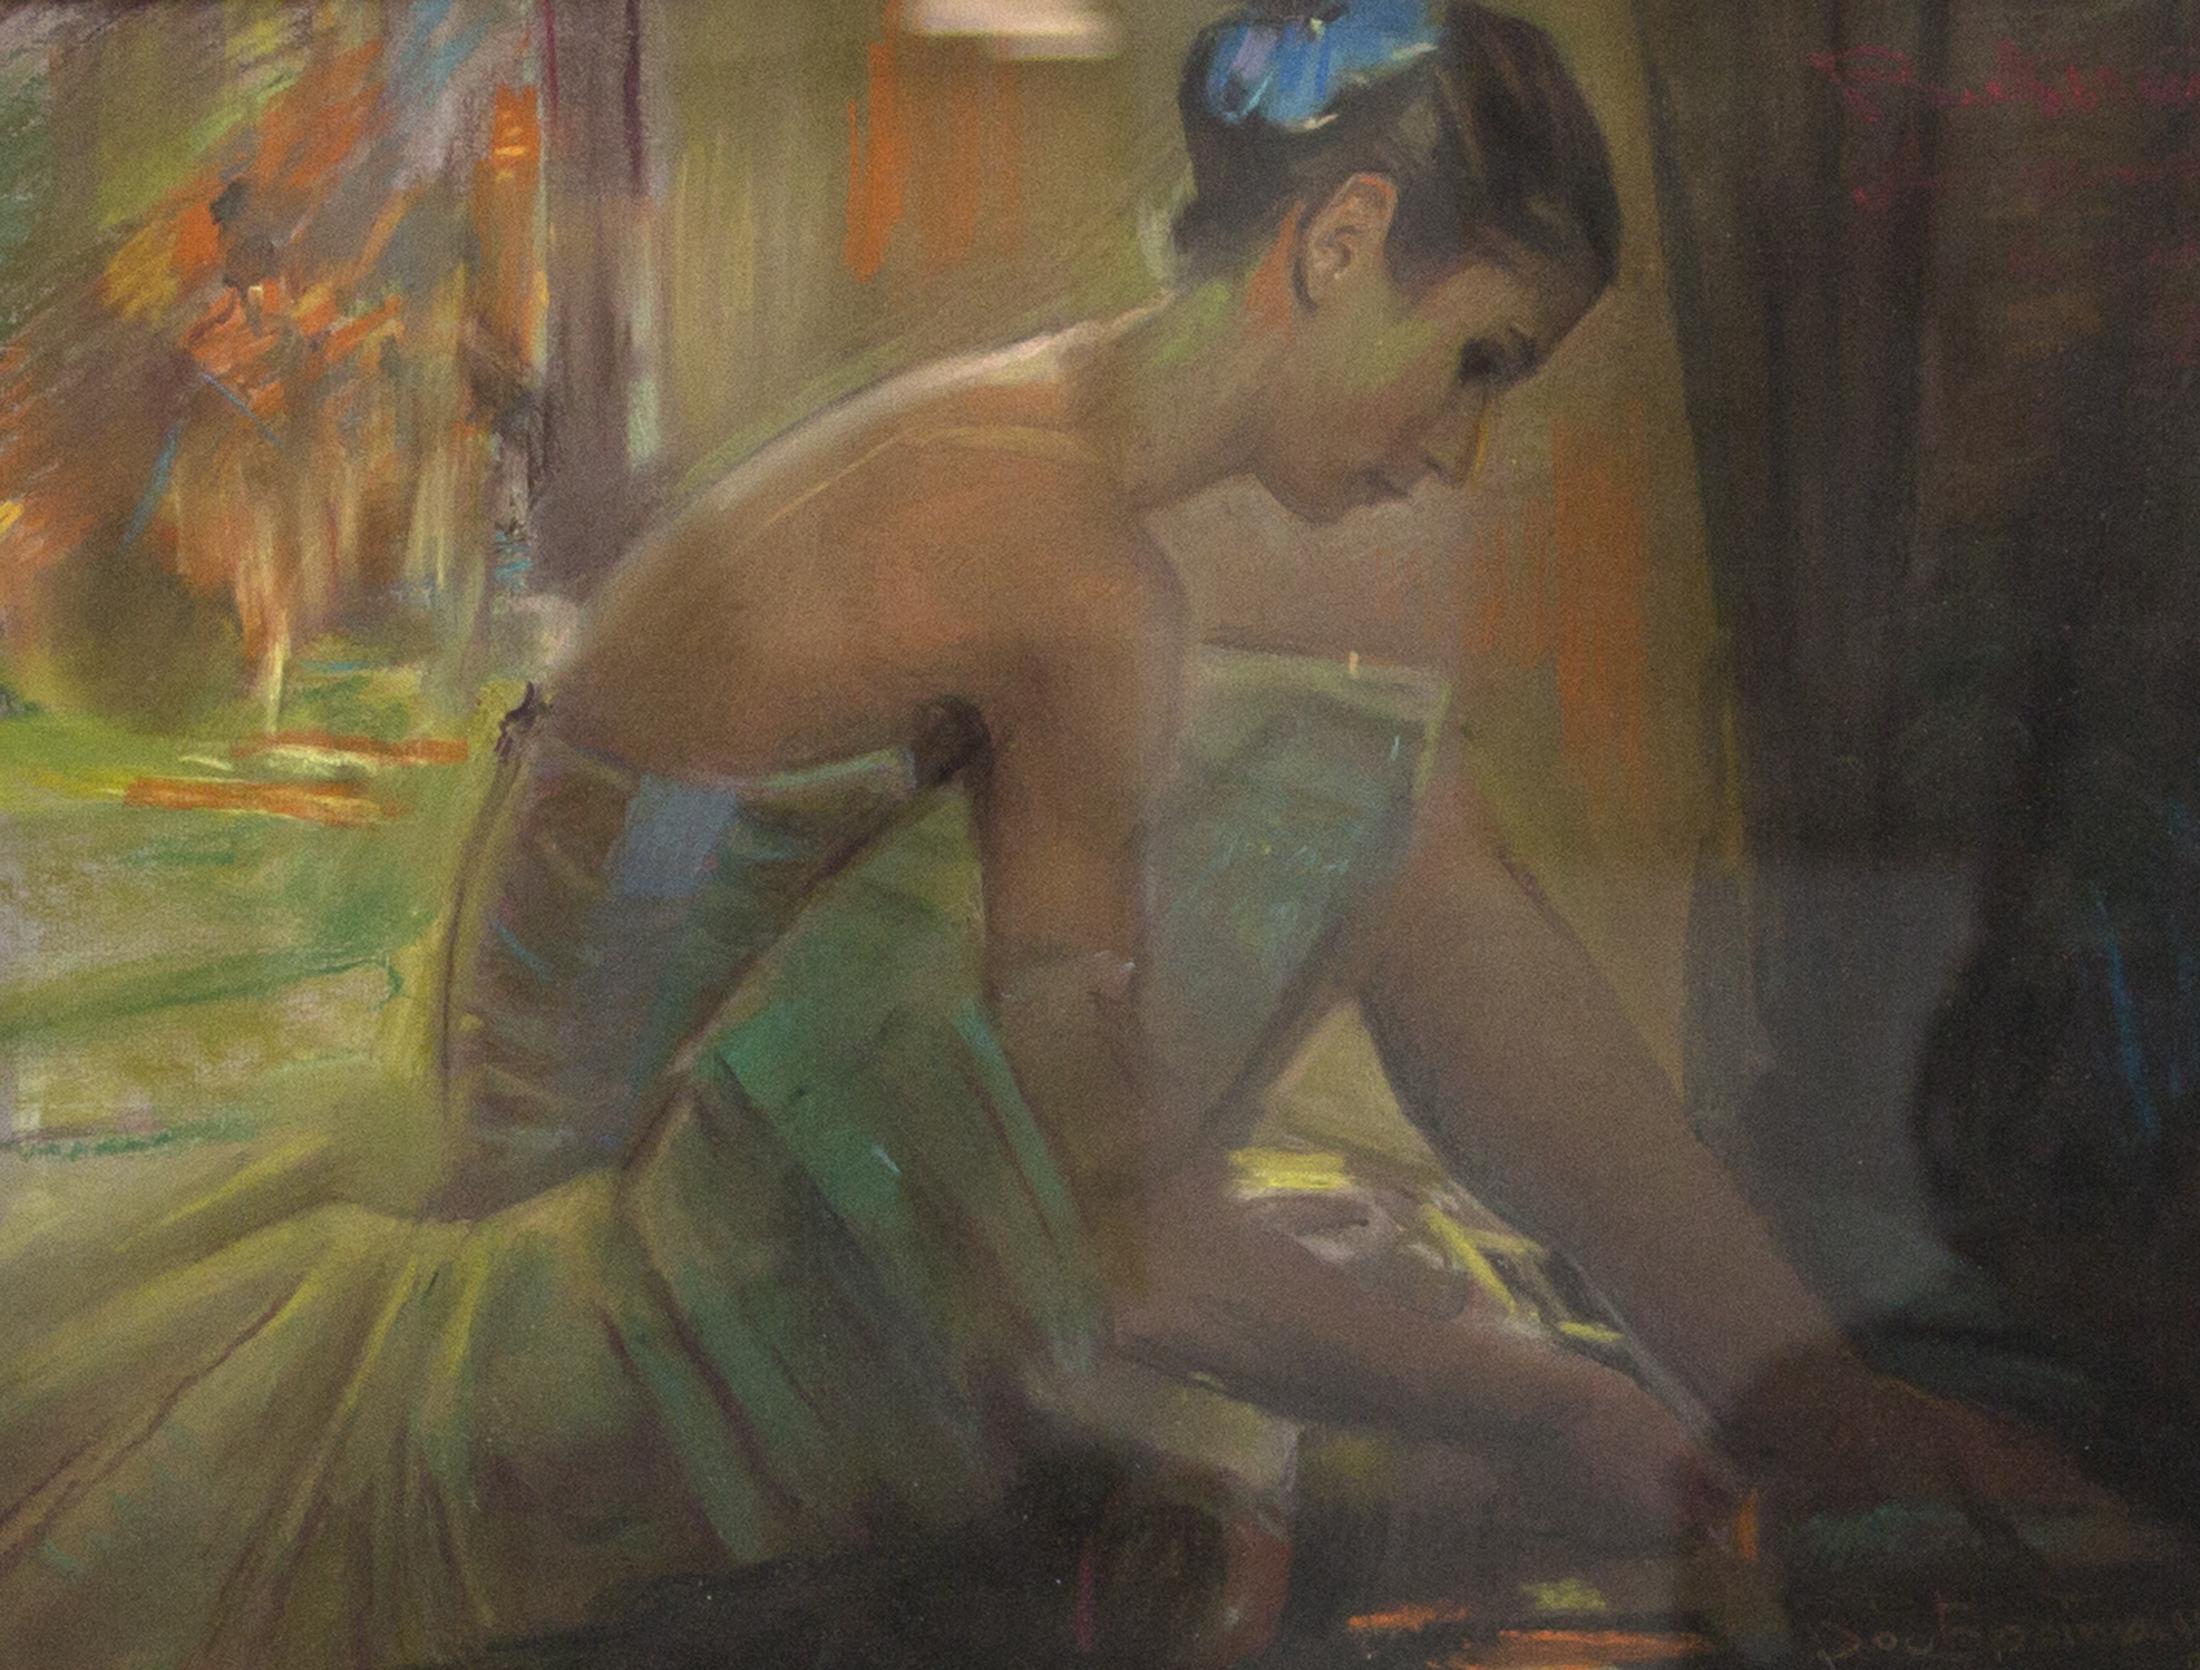 芭蕾舞演员A.Dementieva. Original modern art painting